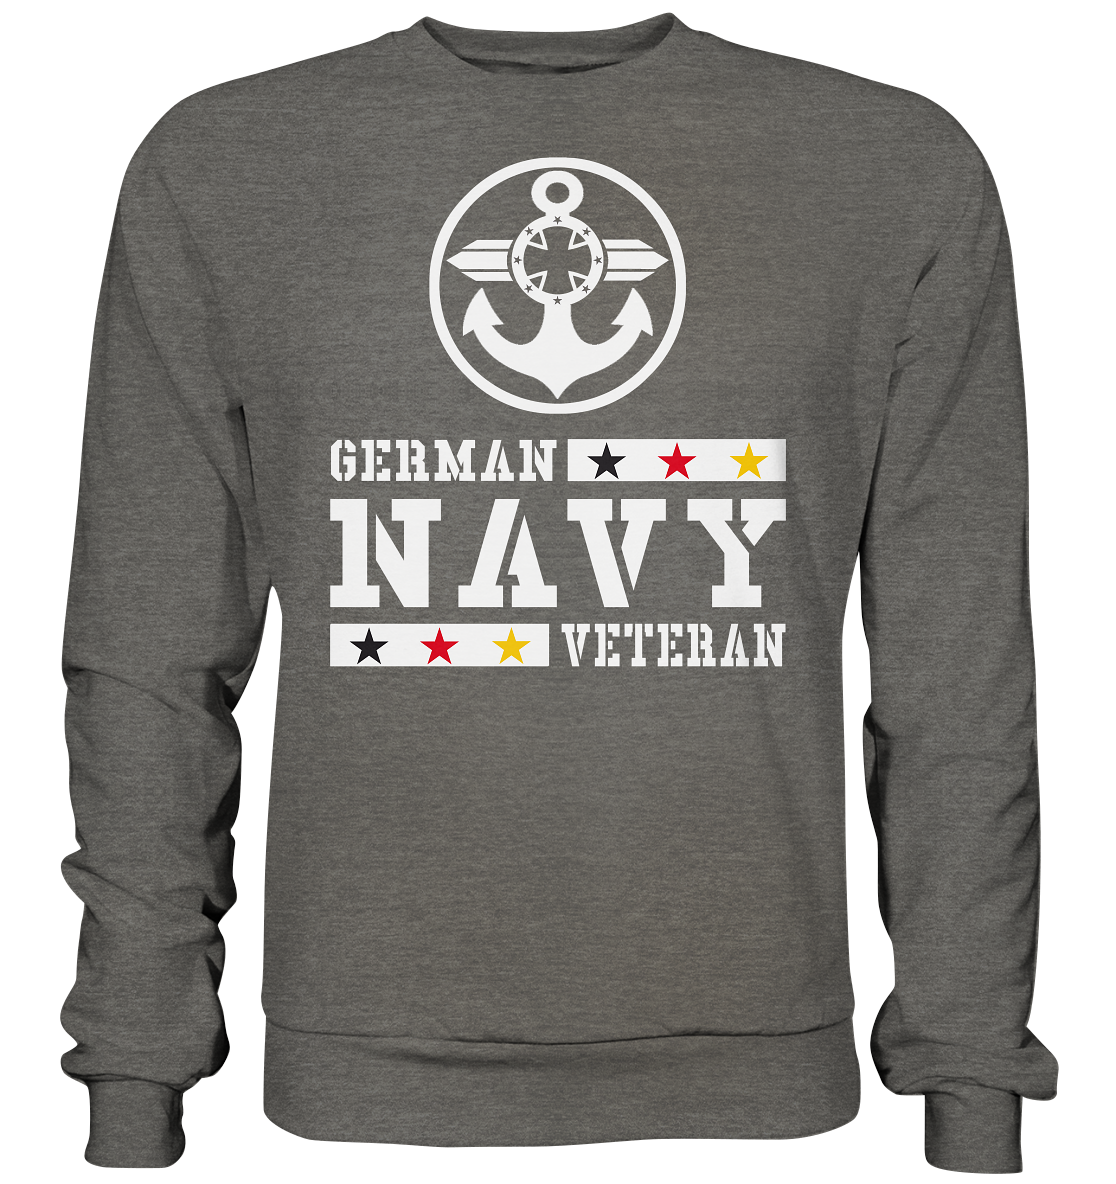 GERMAN NAVY VETERAN ANKER - Basic Sweatshirt